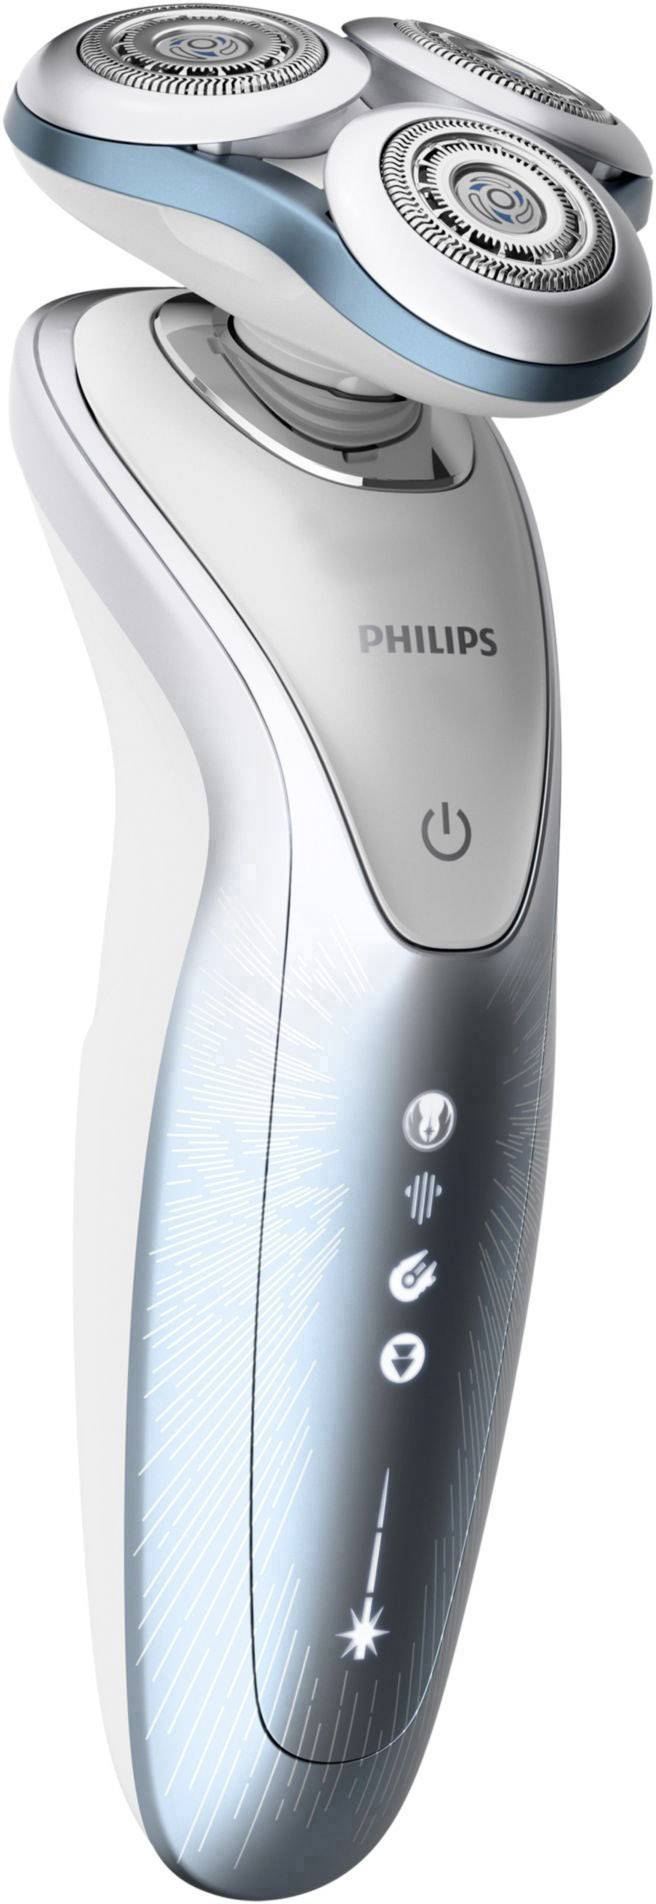 Роторная филипс. Филипс бритва sw7700. Philips 7000 Series бритва. Роторная бритва Филипс. Бритва мужская Филипс роторная.